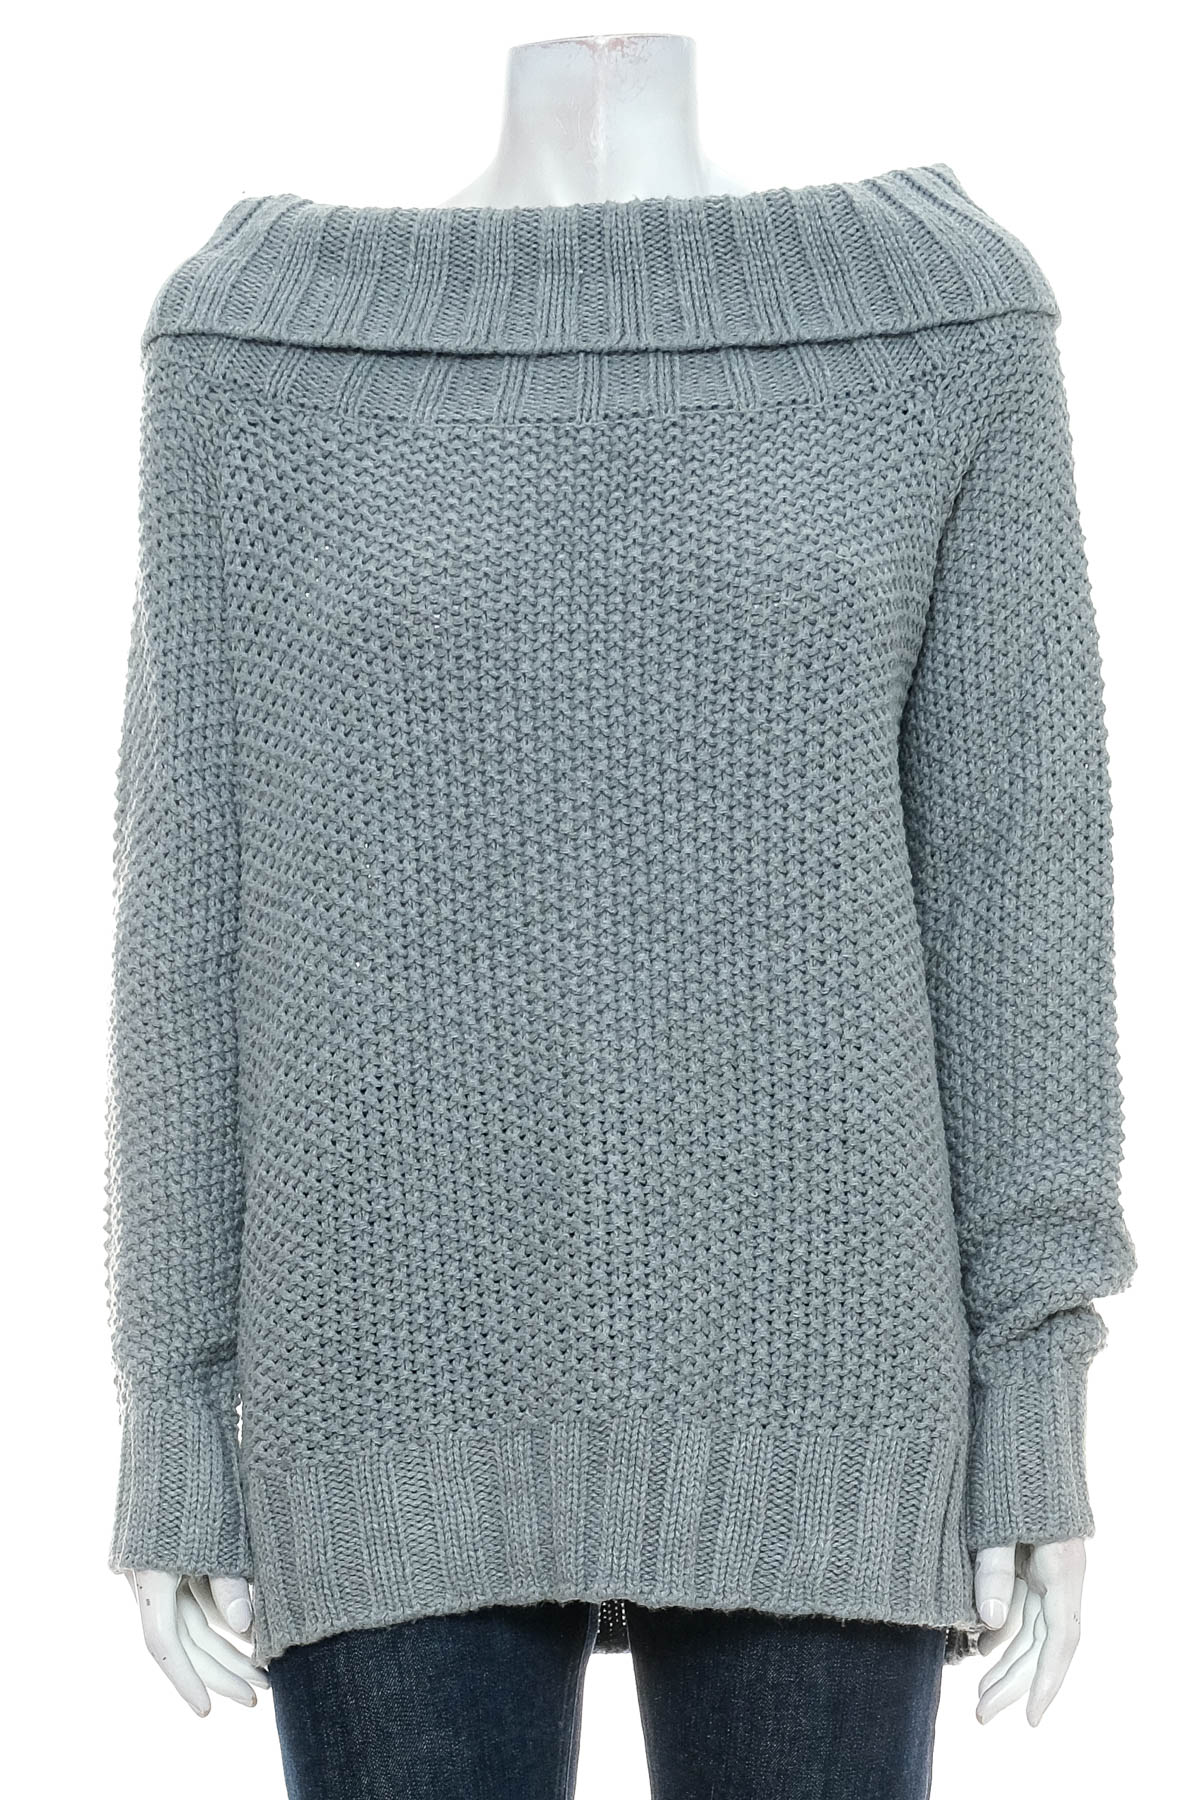 Women's sweater - Now - 0